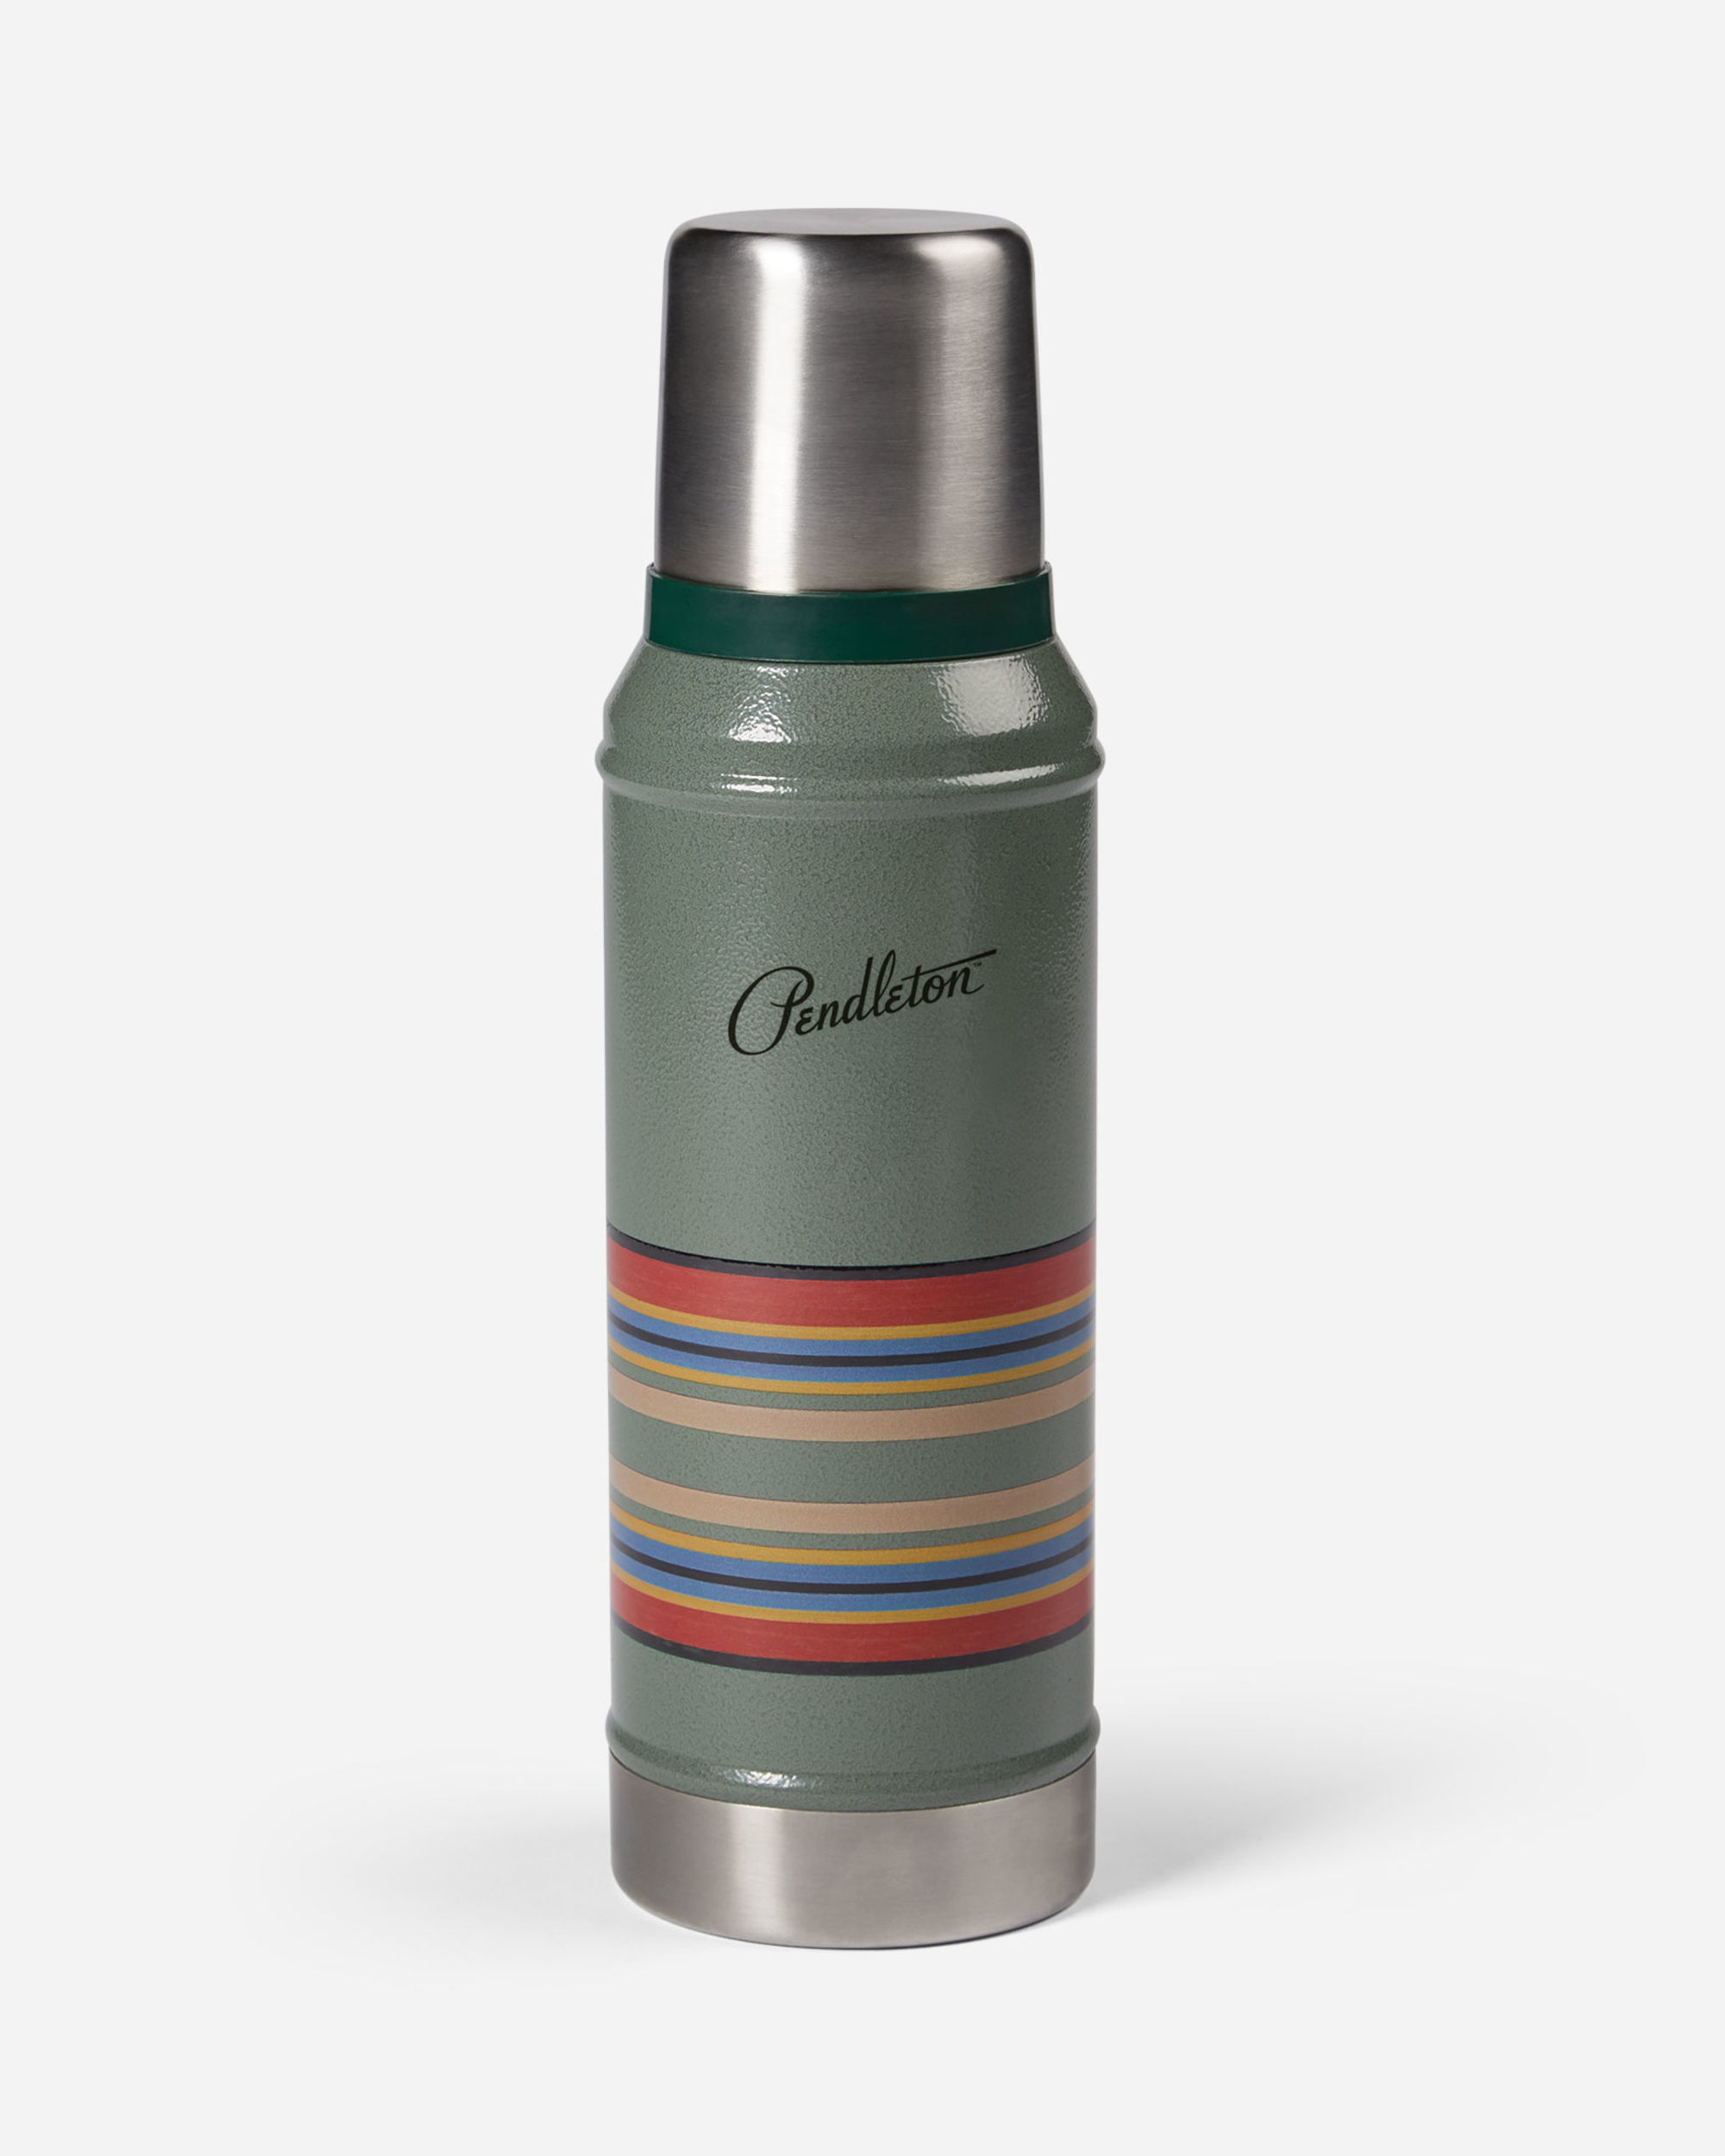 Pendleton Stanley Vacuum Bottle/ Thermos. 1.5 QT - Bunting Online Auctions